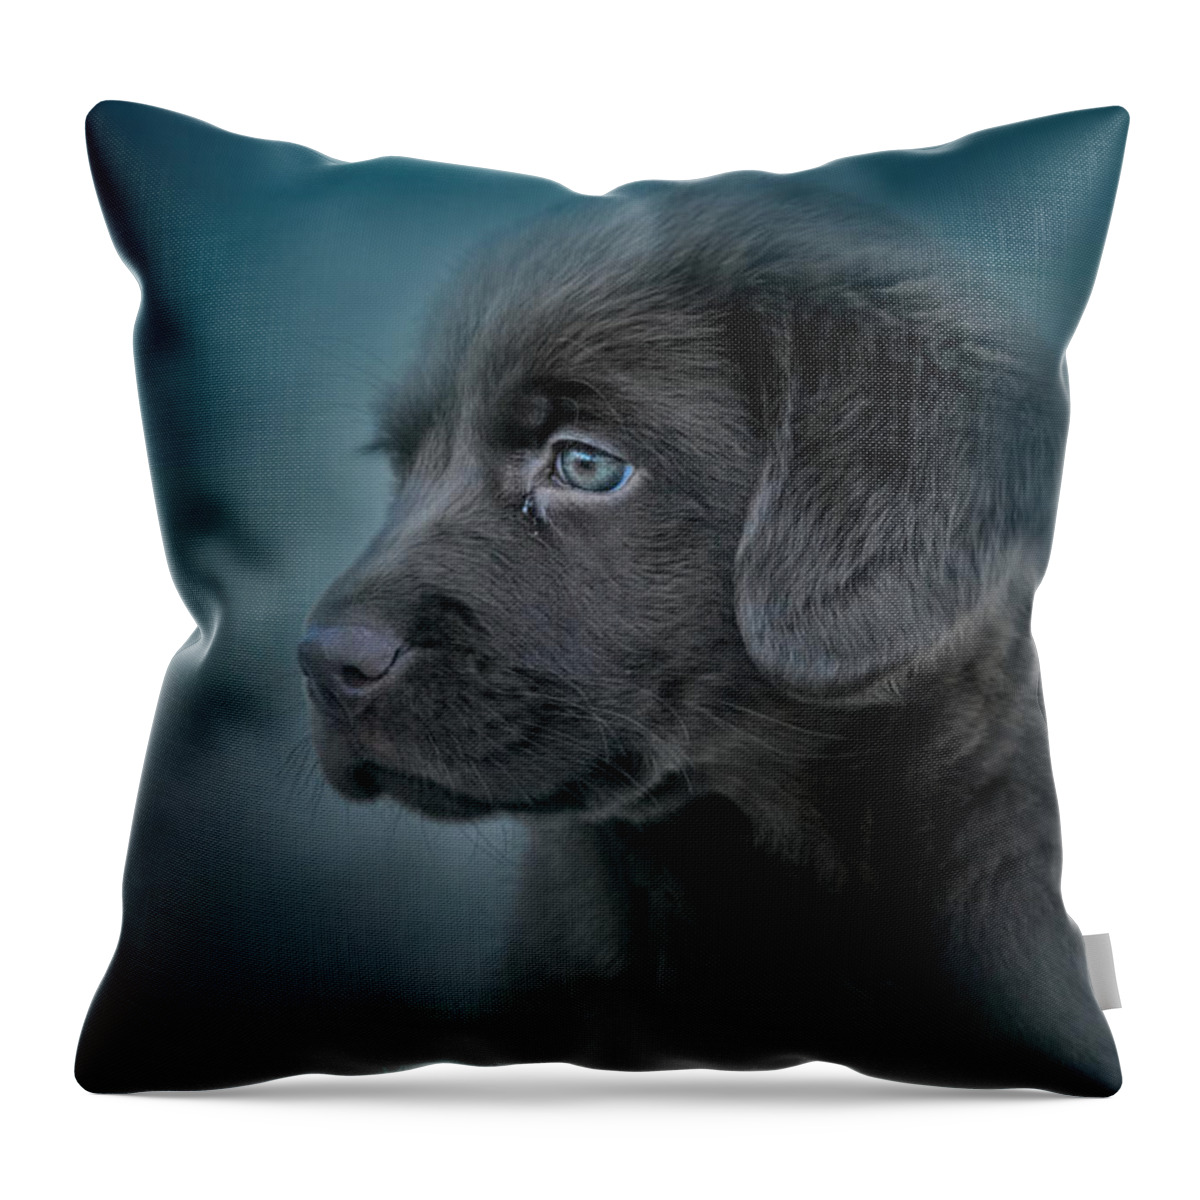 Jai Johnson Throw Pillow featuring the photograph Blue Eyed Puppy by Jai Johnson